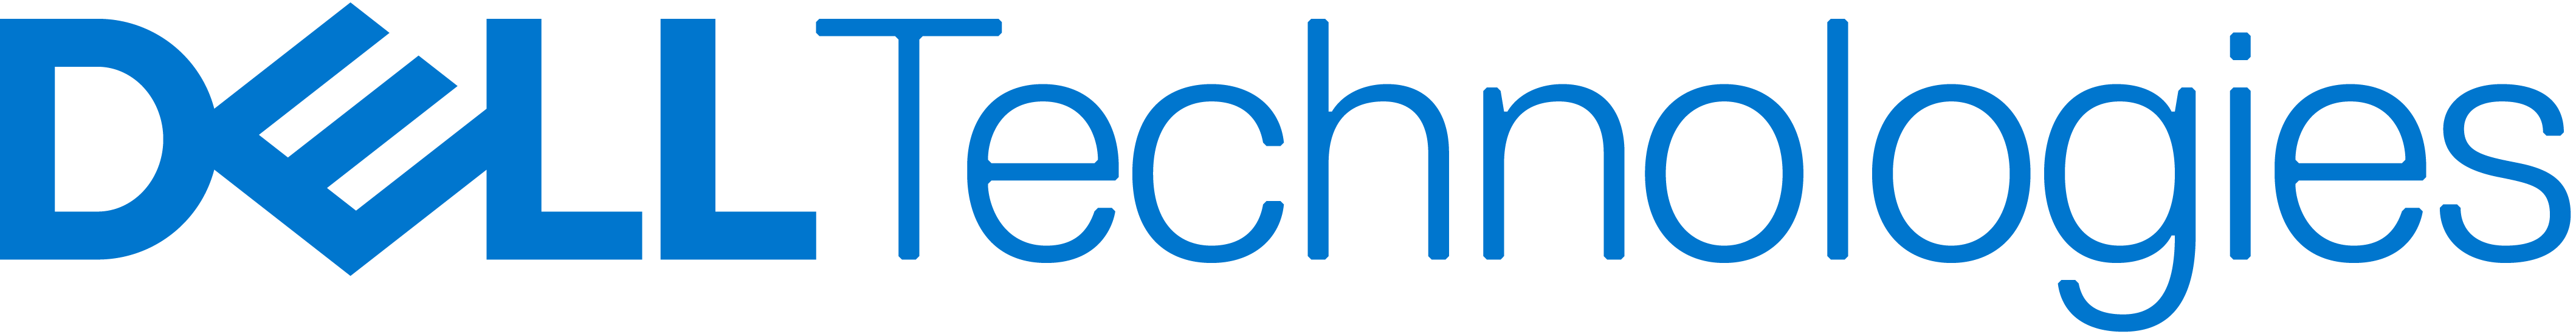 delltech-logo-prm-blue-rgb